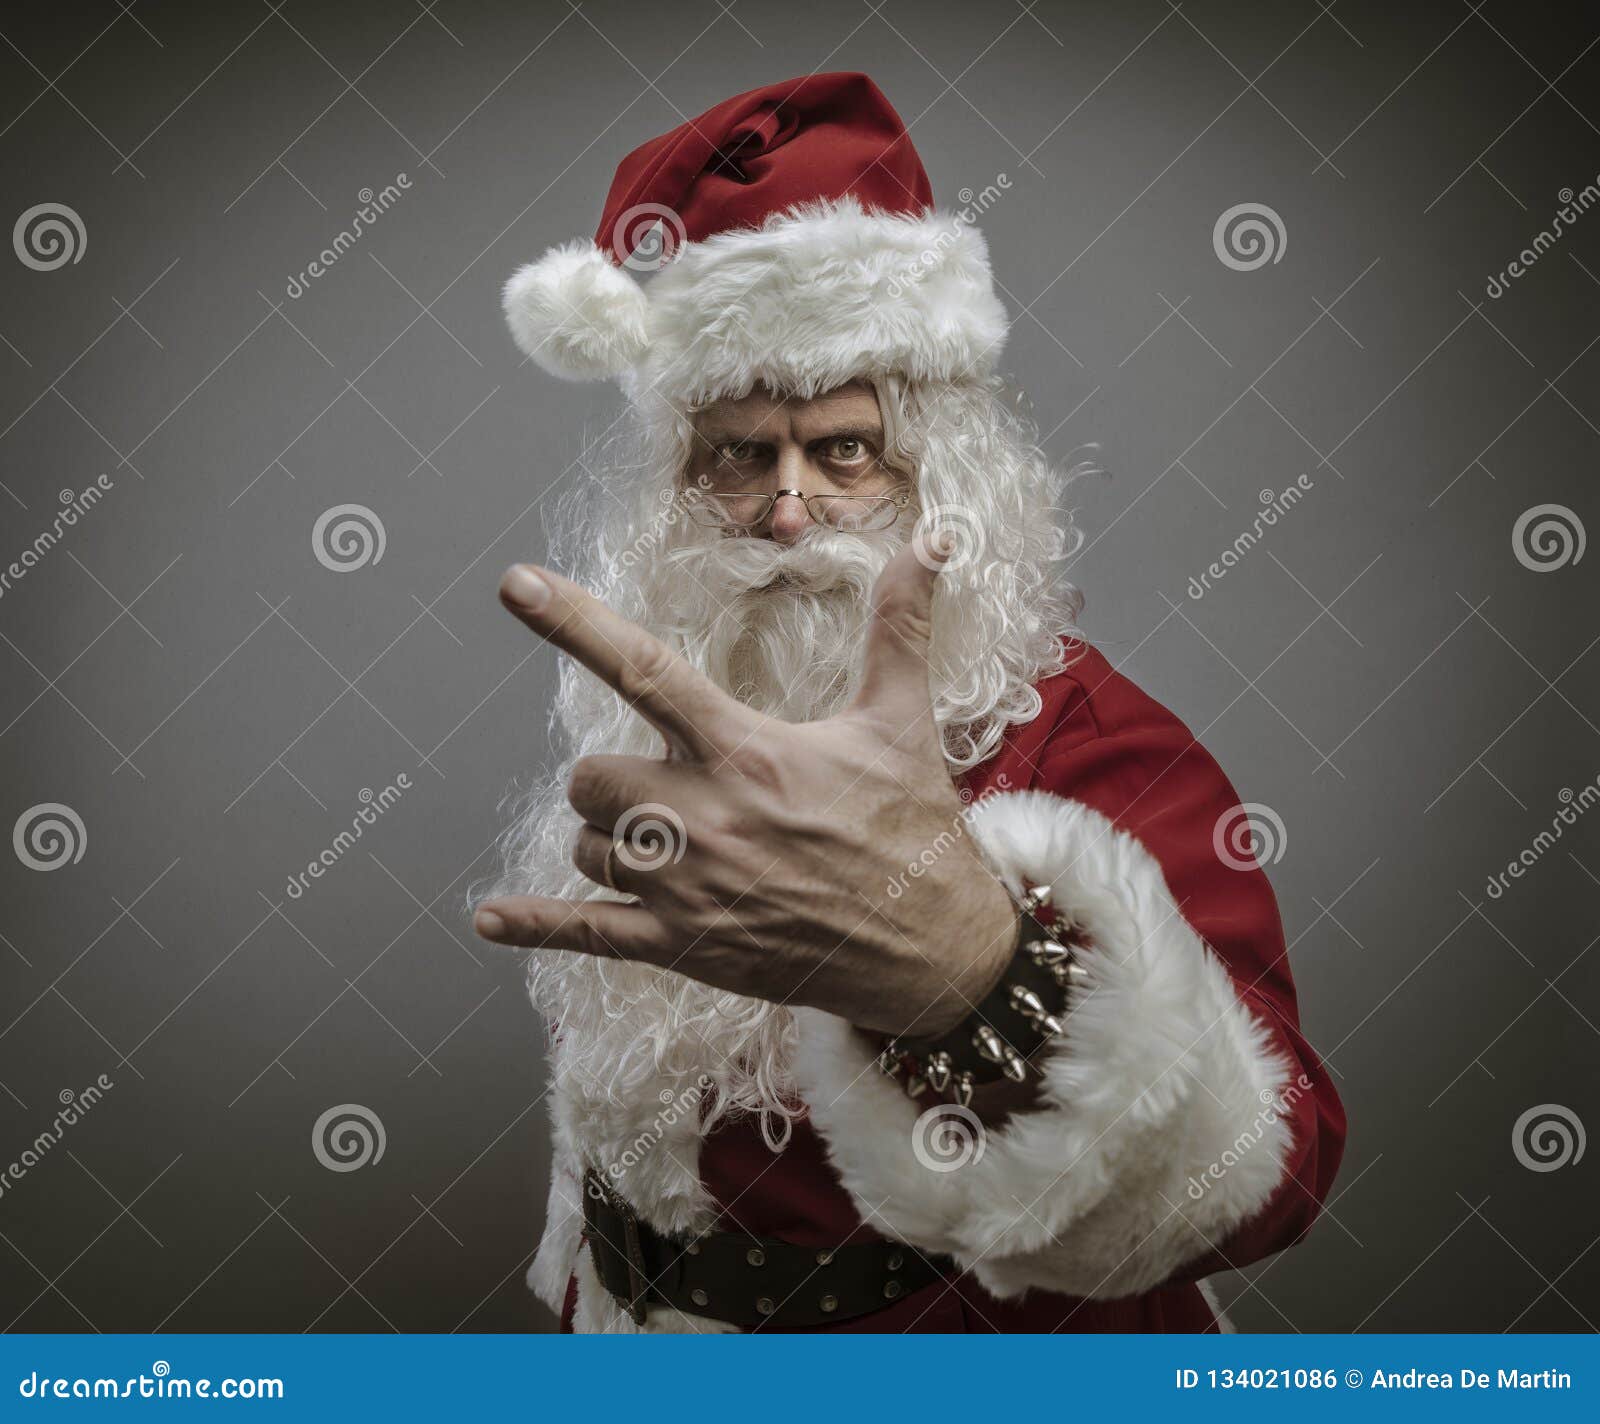 Cool Rock Santa Claus Stock Photo Image Of Rocker Funny